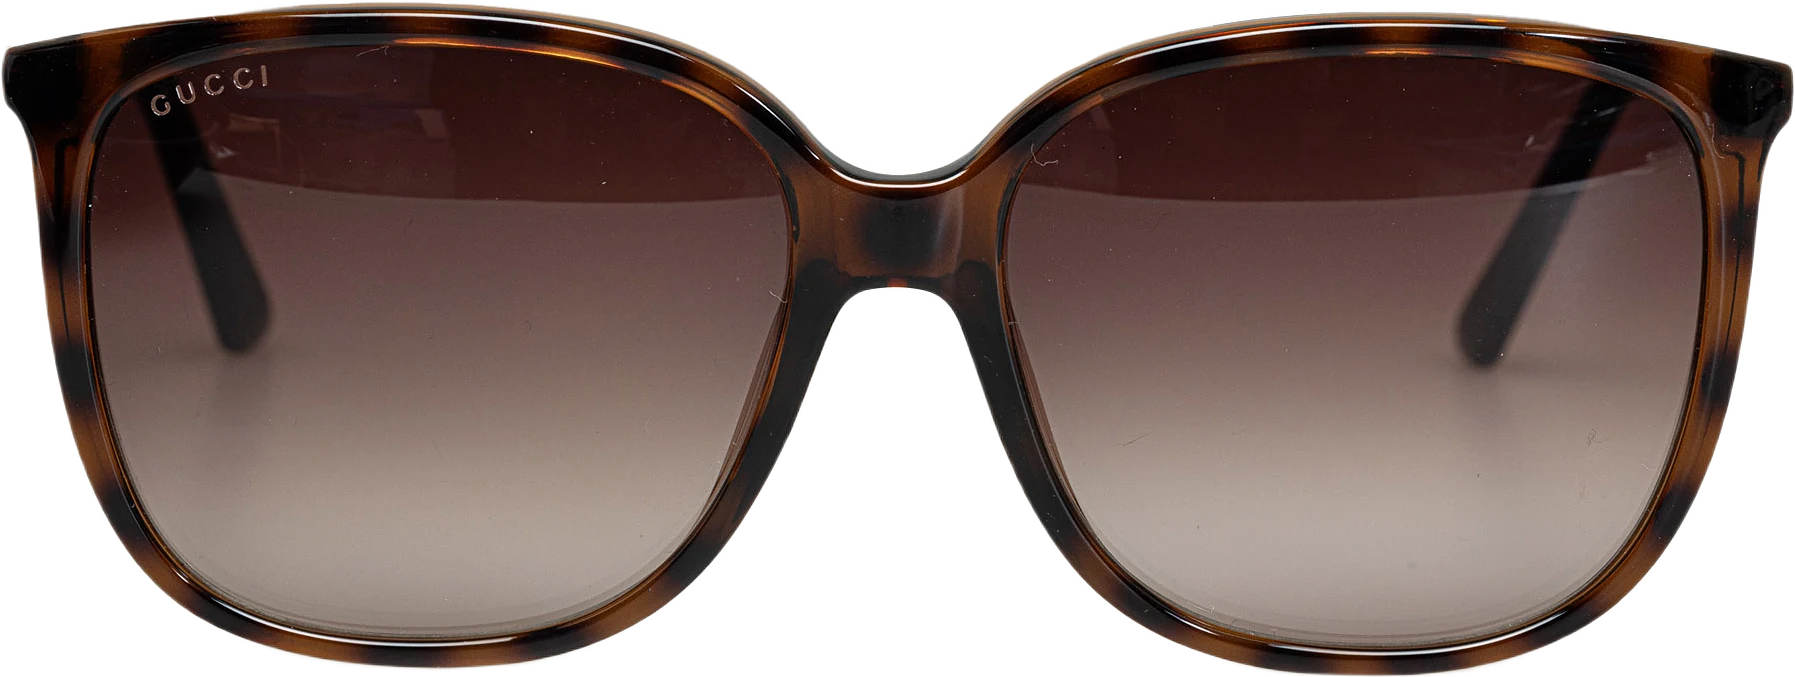 Gucci Round Tinted Sunglasses